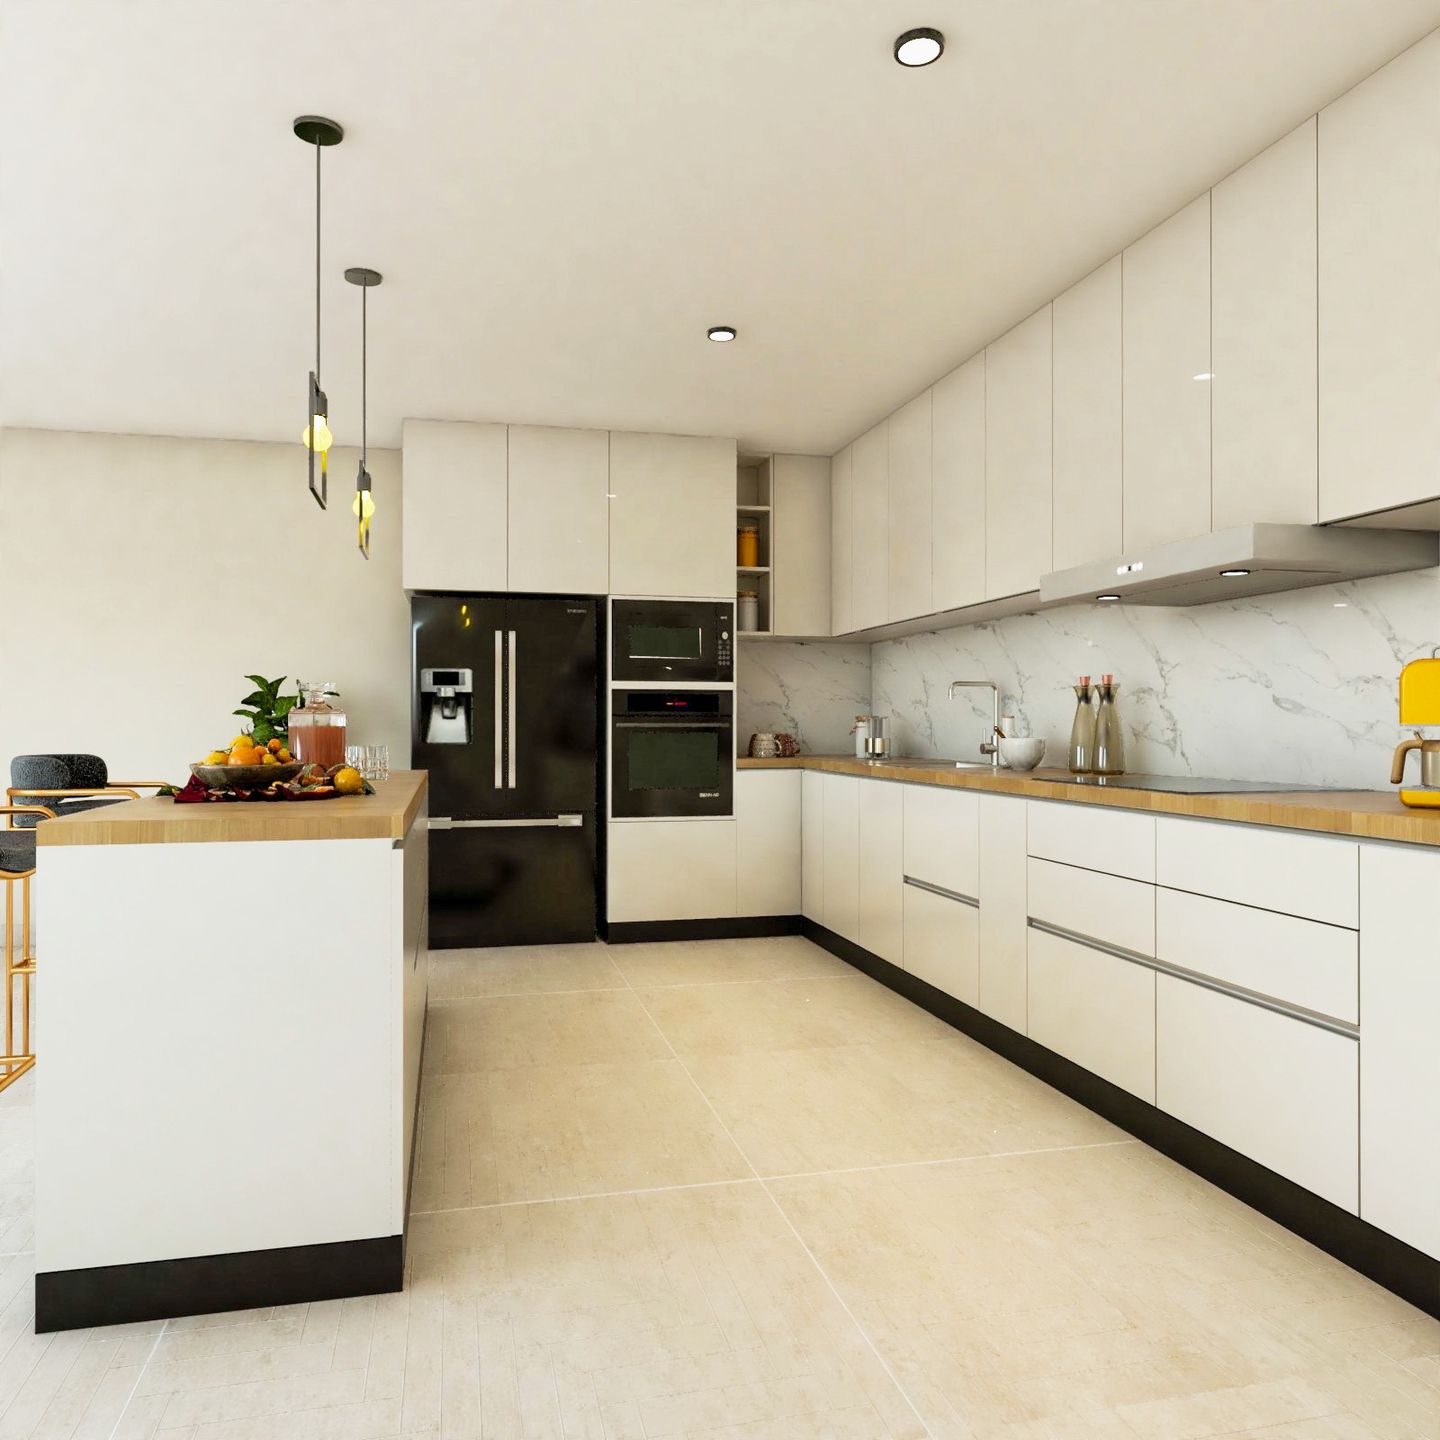 White Island Kitchen Design With Wooden Countertop - Livspace